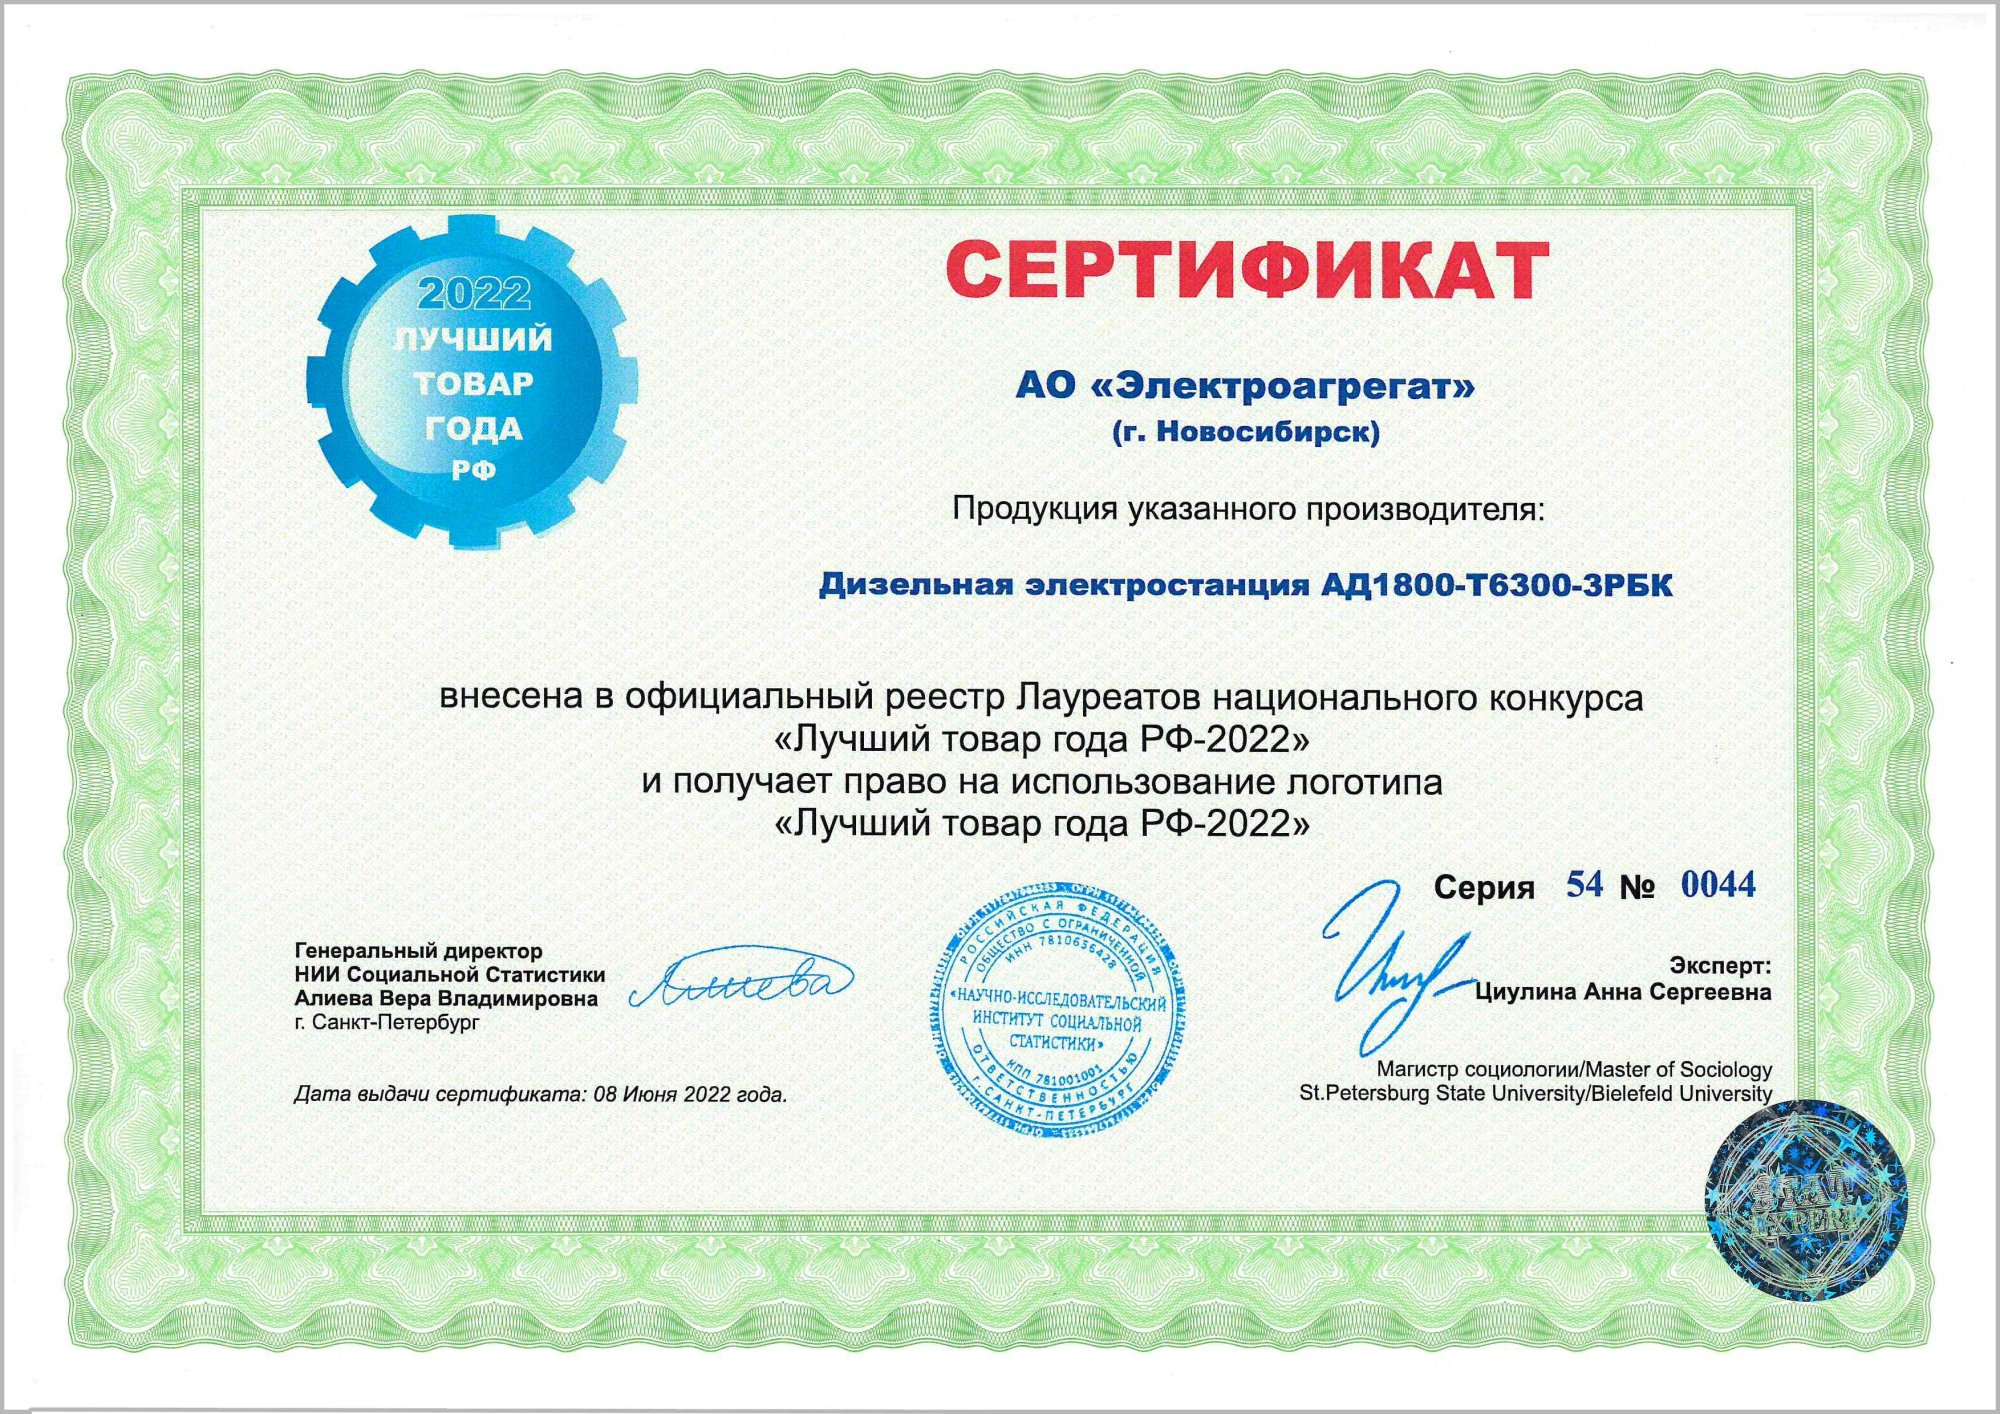 Сертификат АО Электроагрегат на ДГУ АД1800-Т6300-3РБК. Лучший товар года 2022